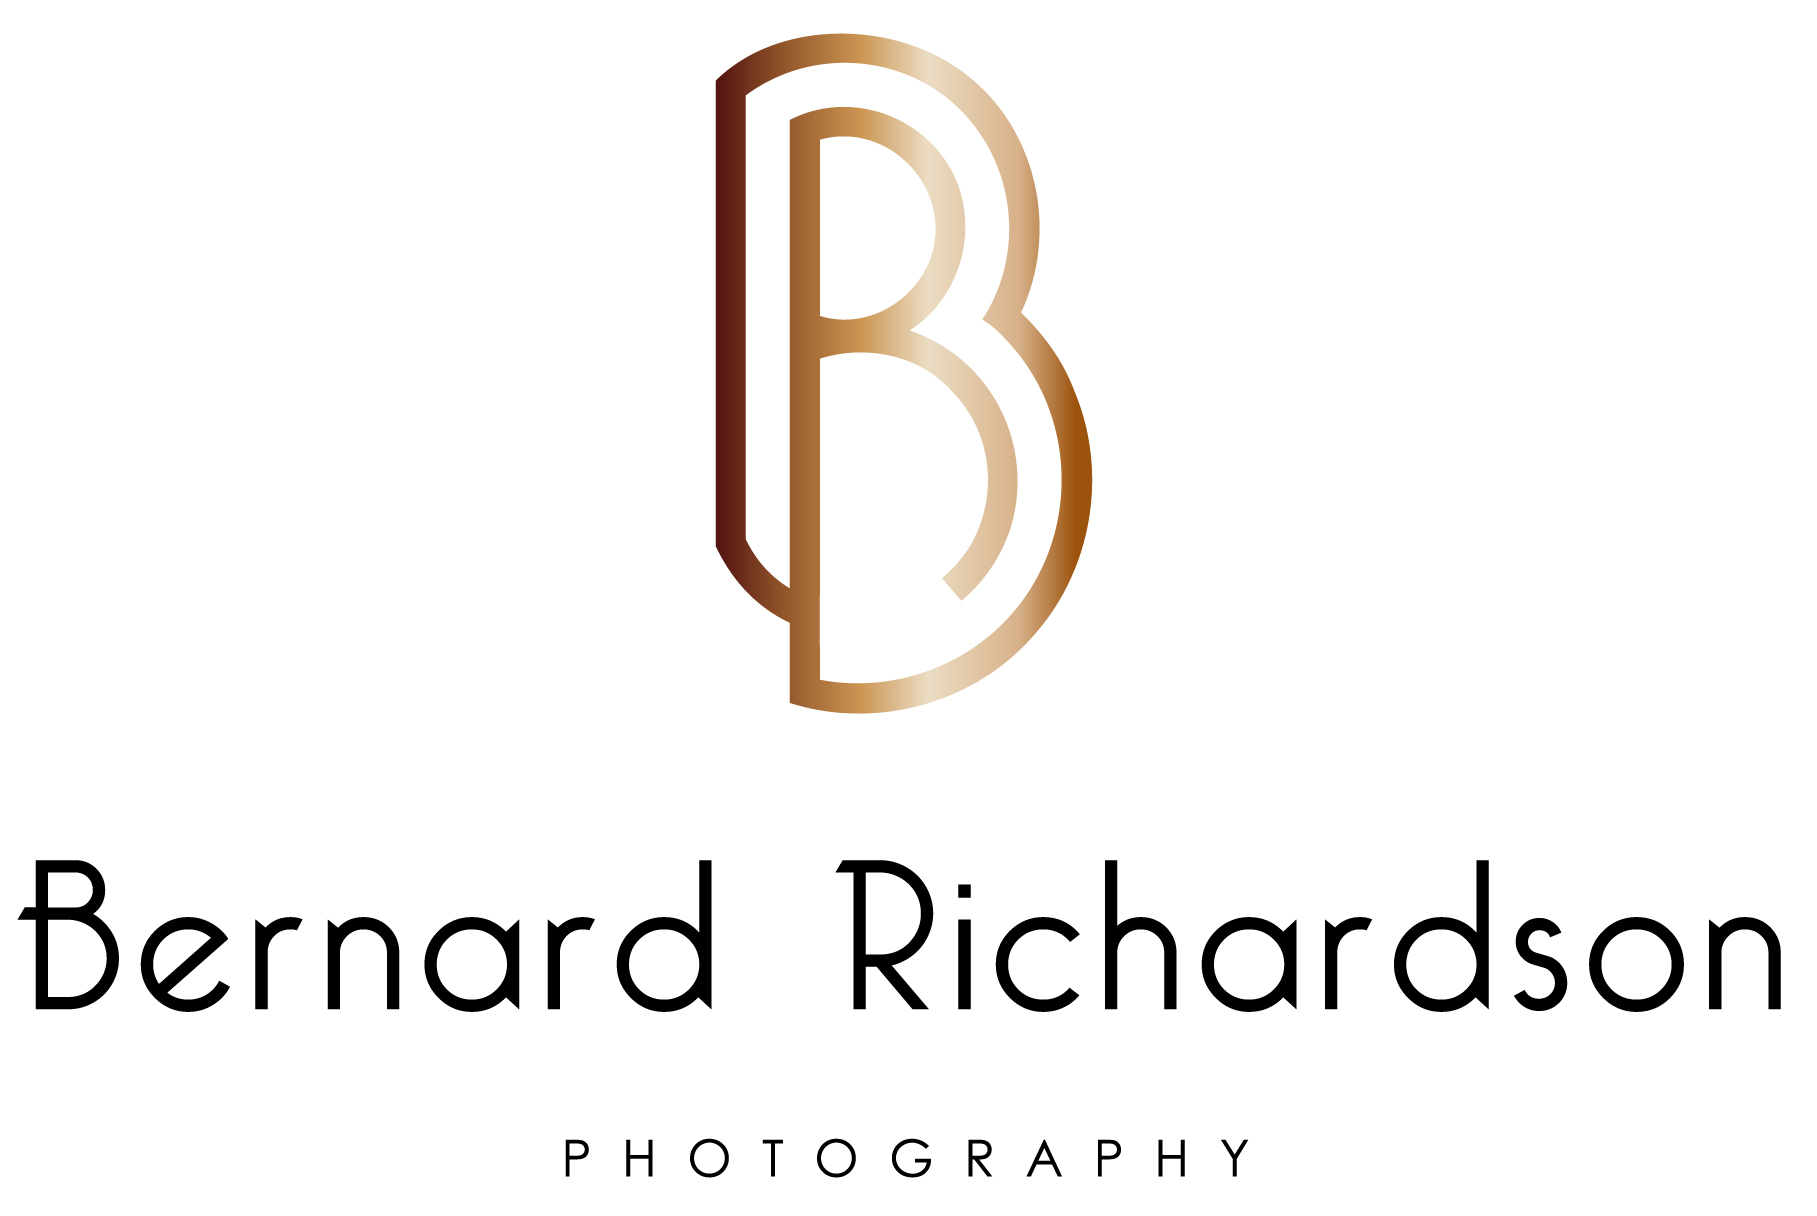 Bernard Richardson Photography Logo